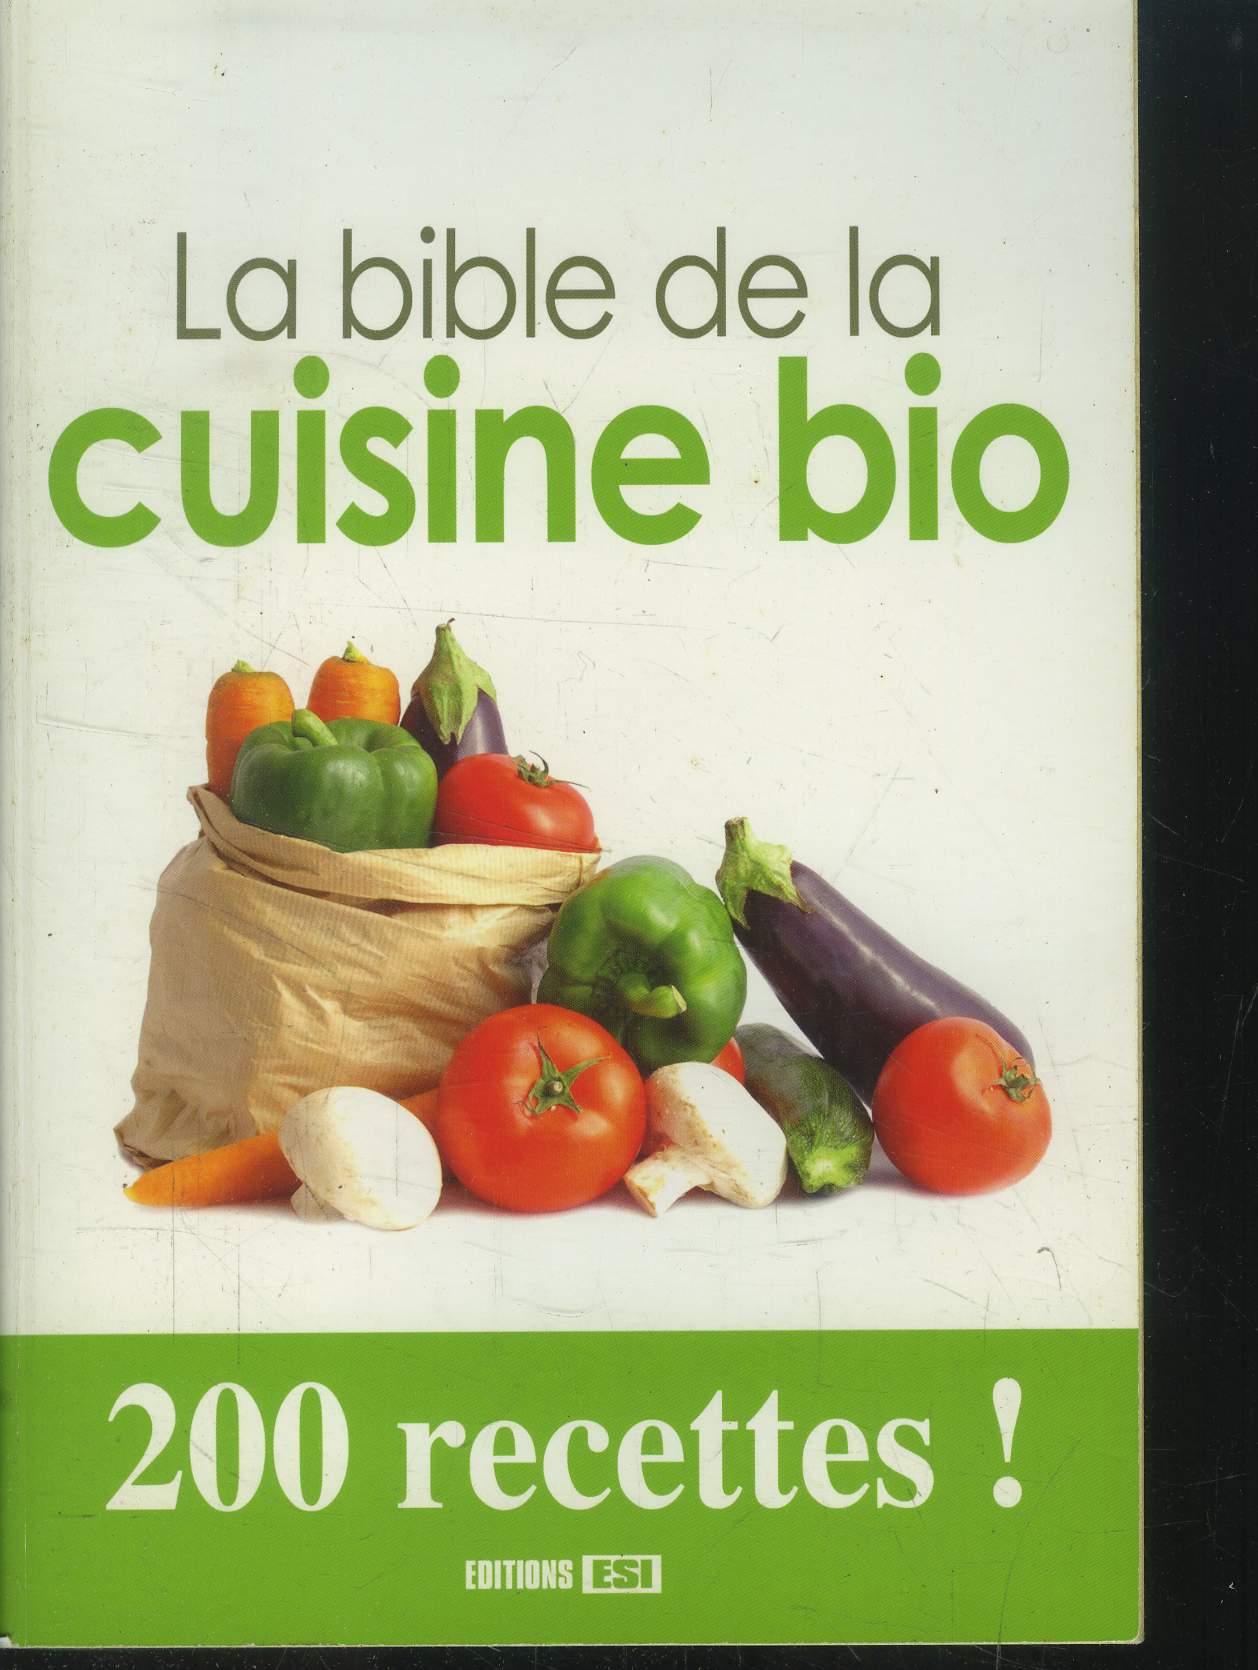 La bible de la cuisine bio